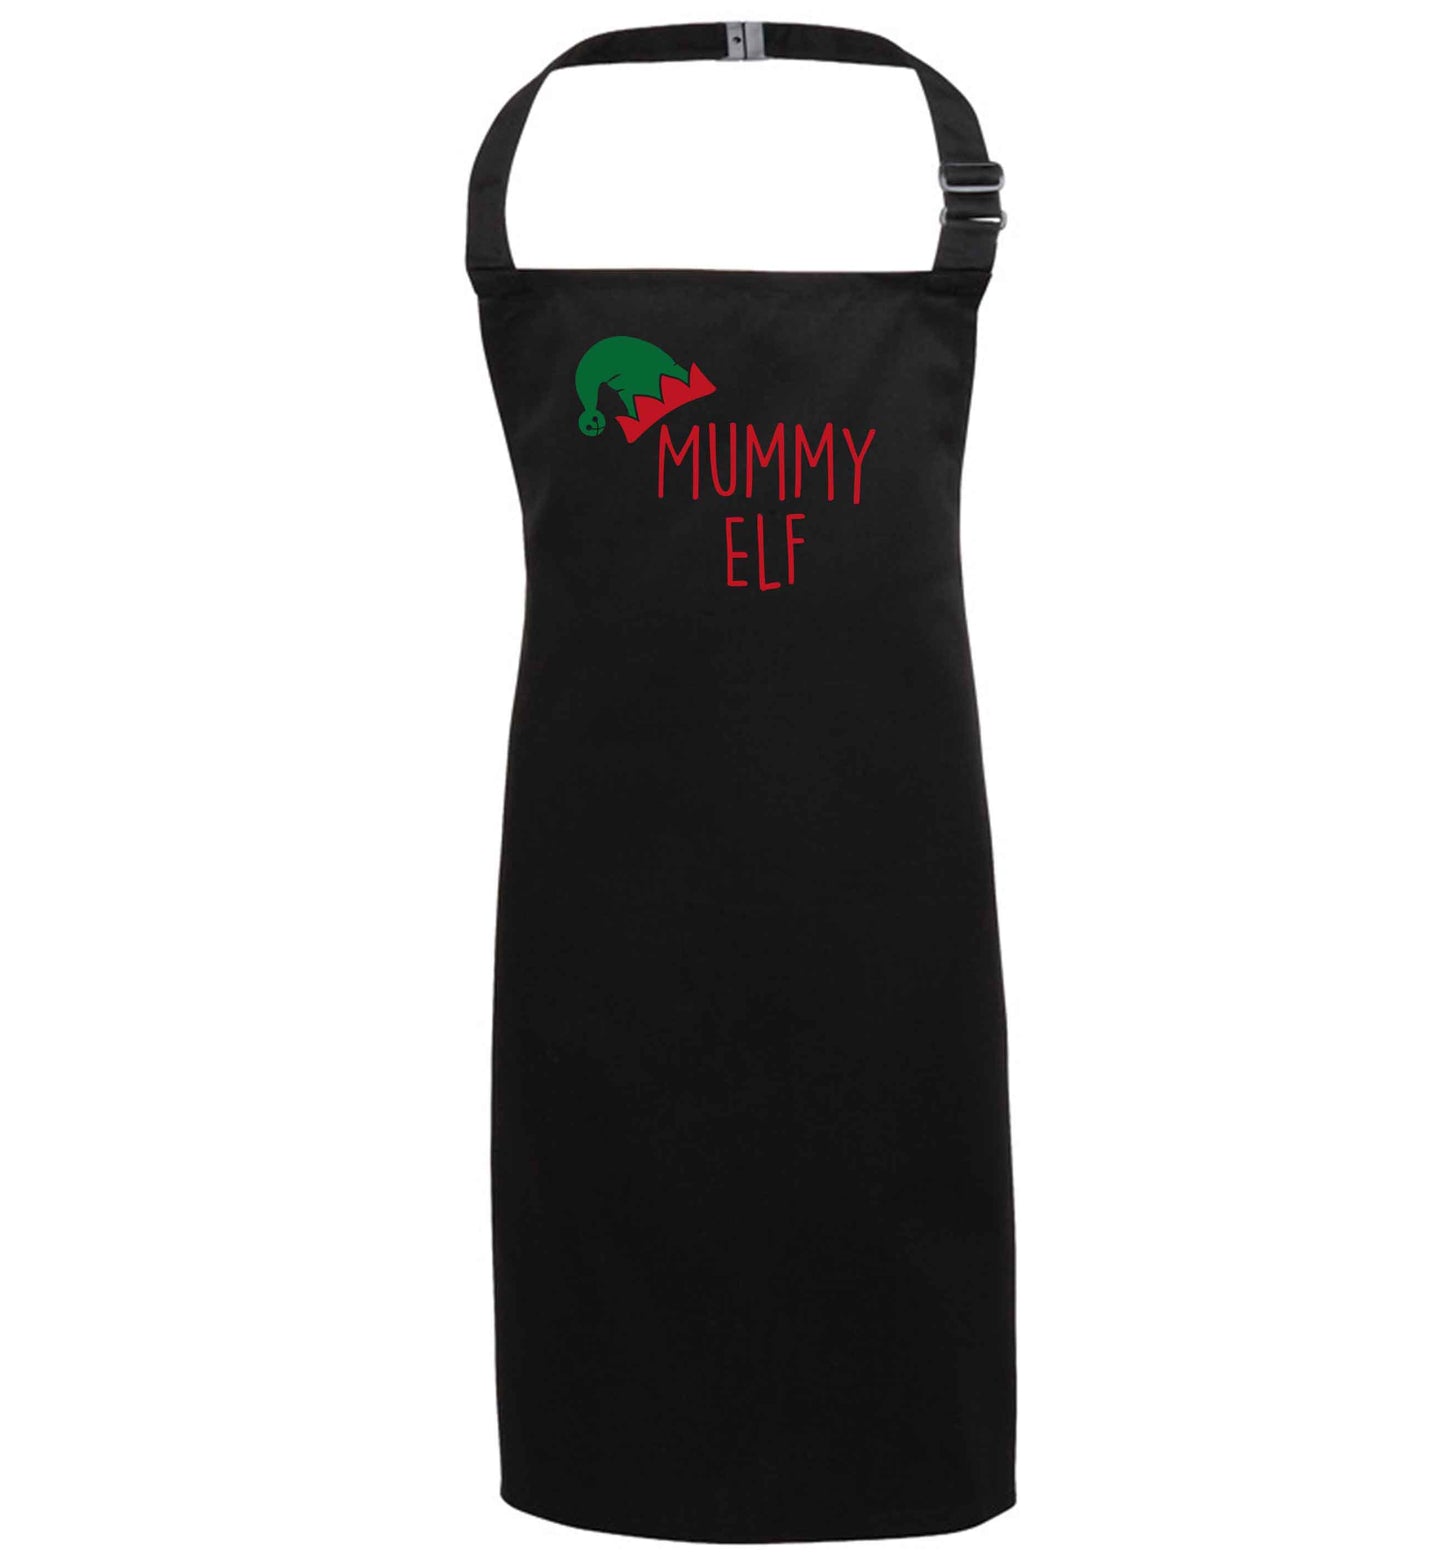 Mummy elf black apron 7-10 years